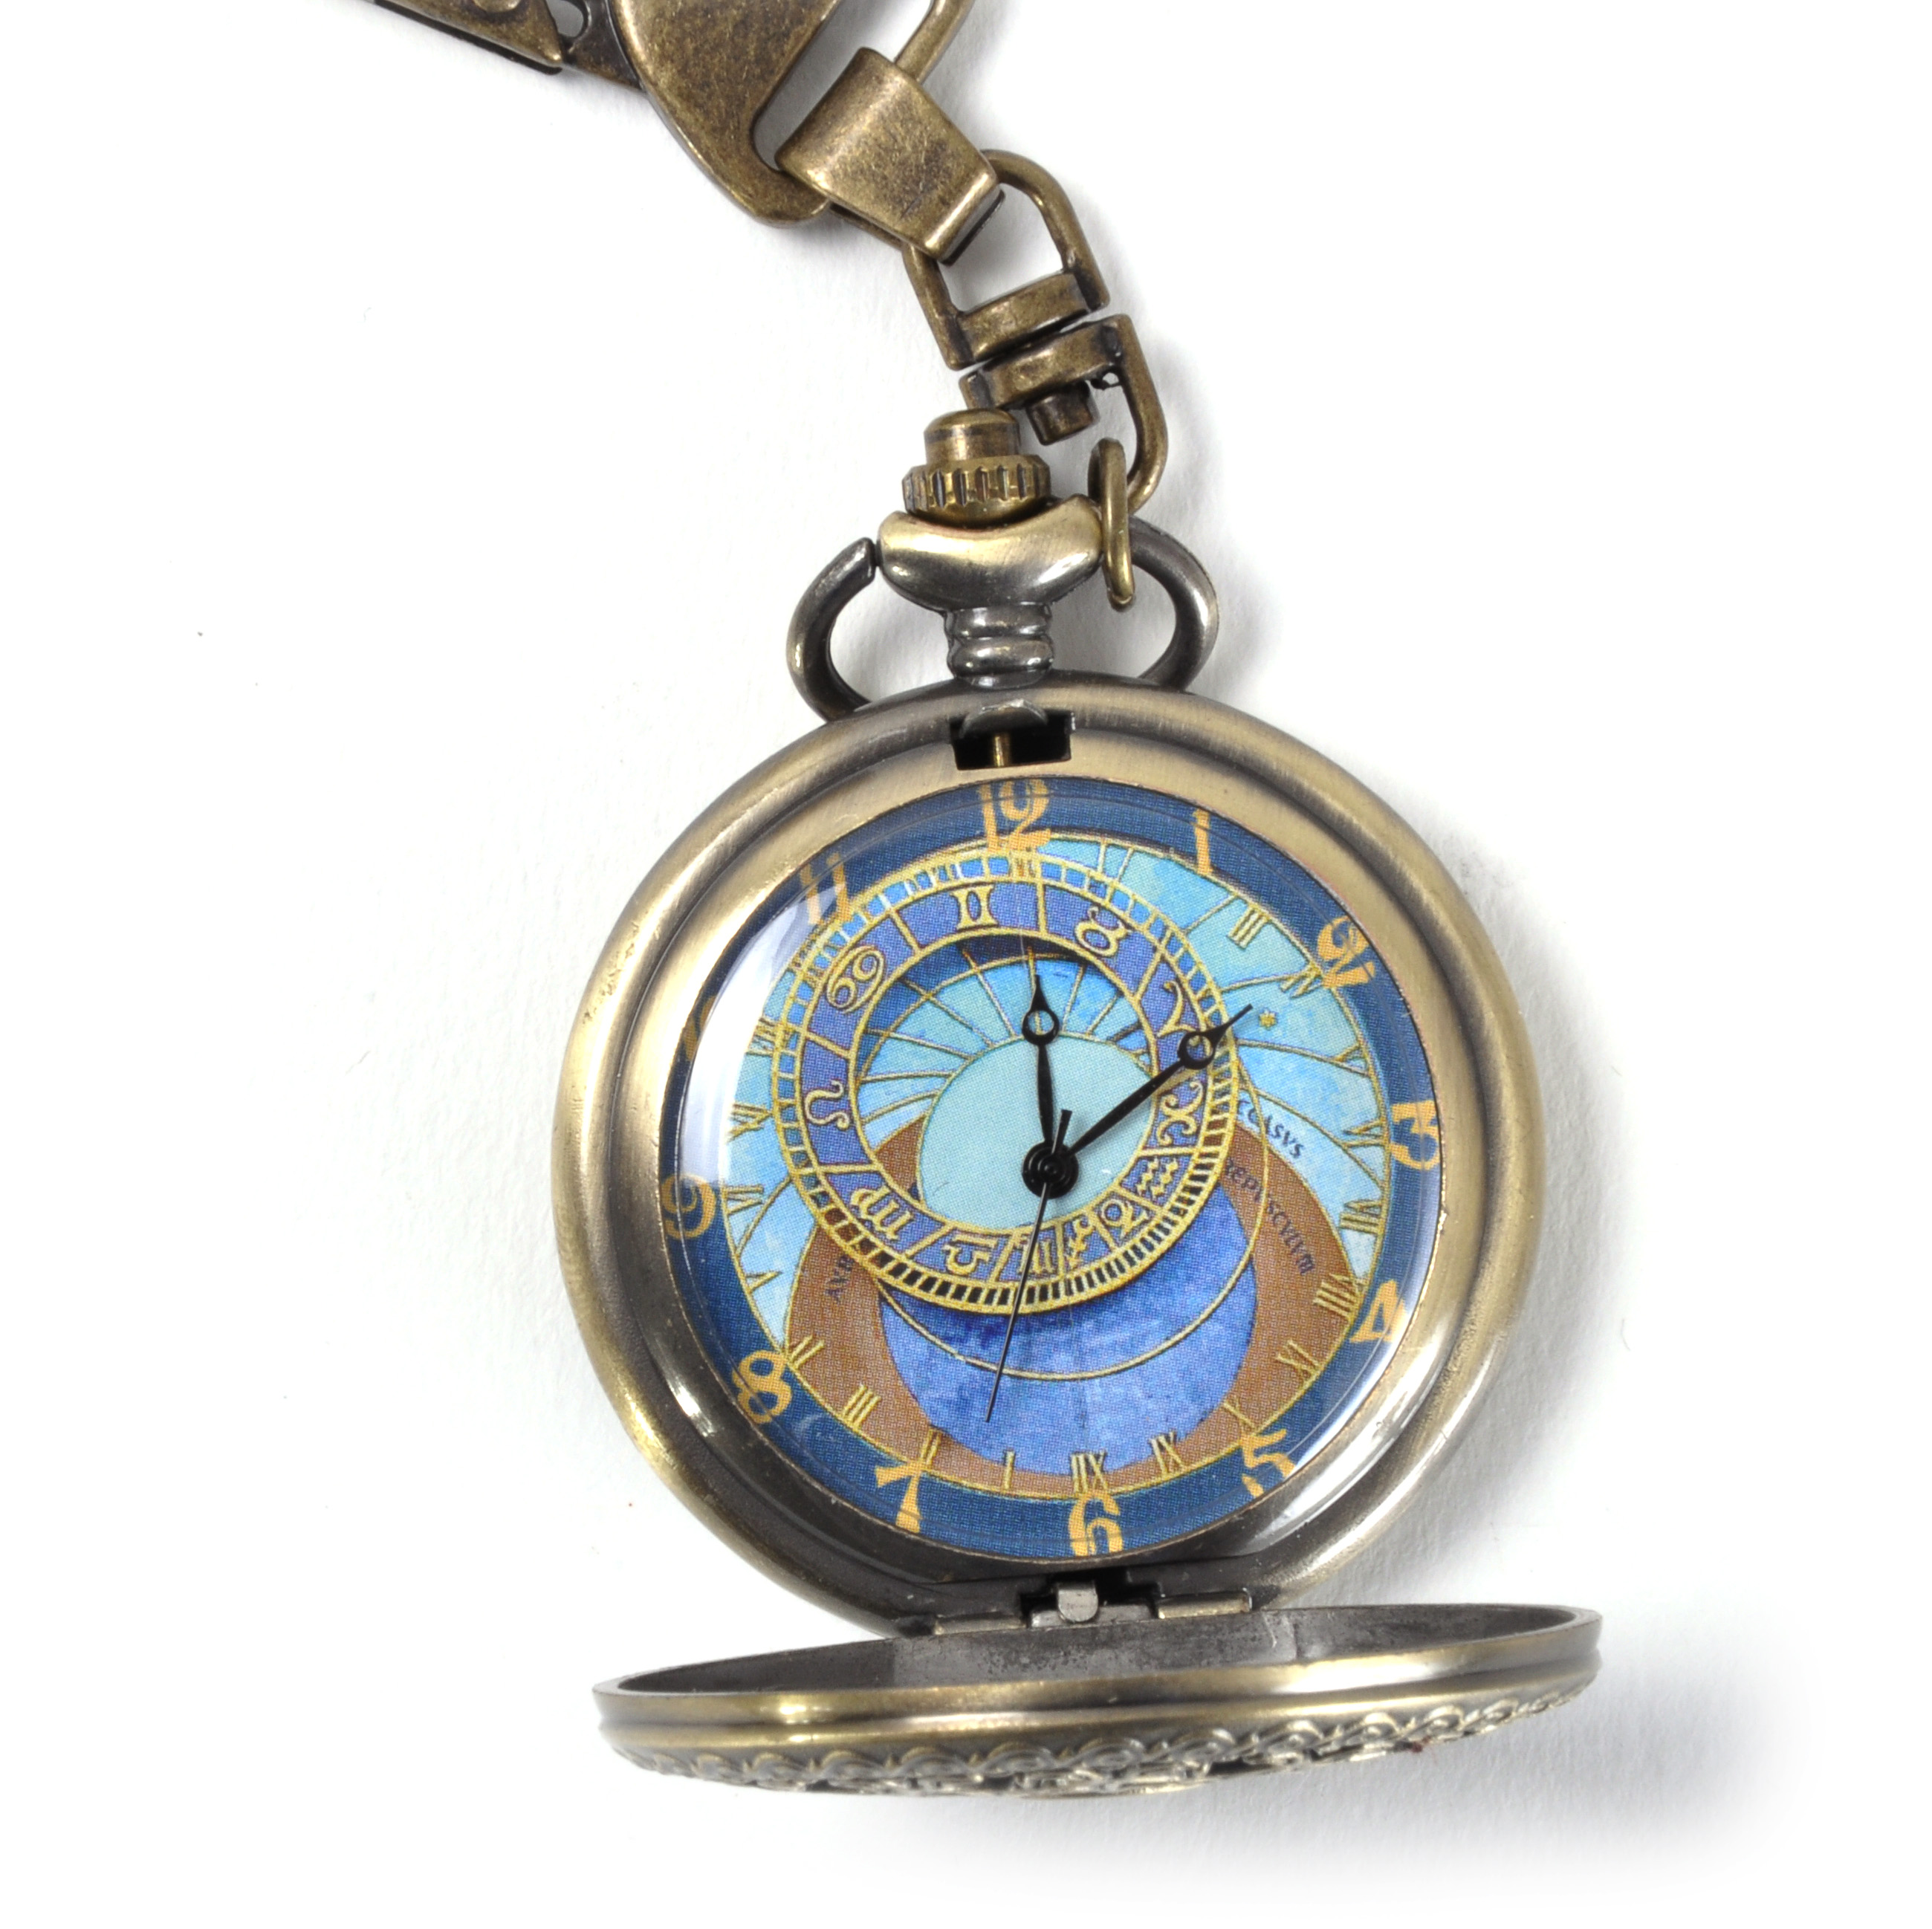 Astrolabe Pocket Watch with Pendant 5055491413056 | eBay